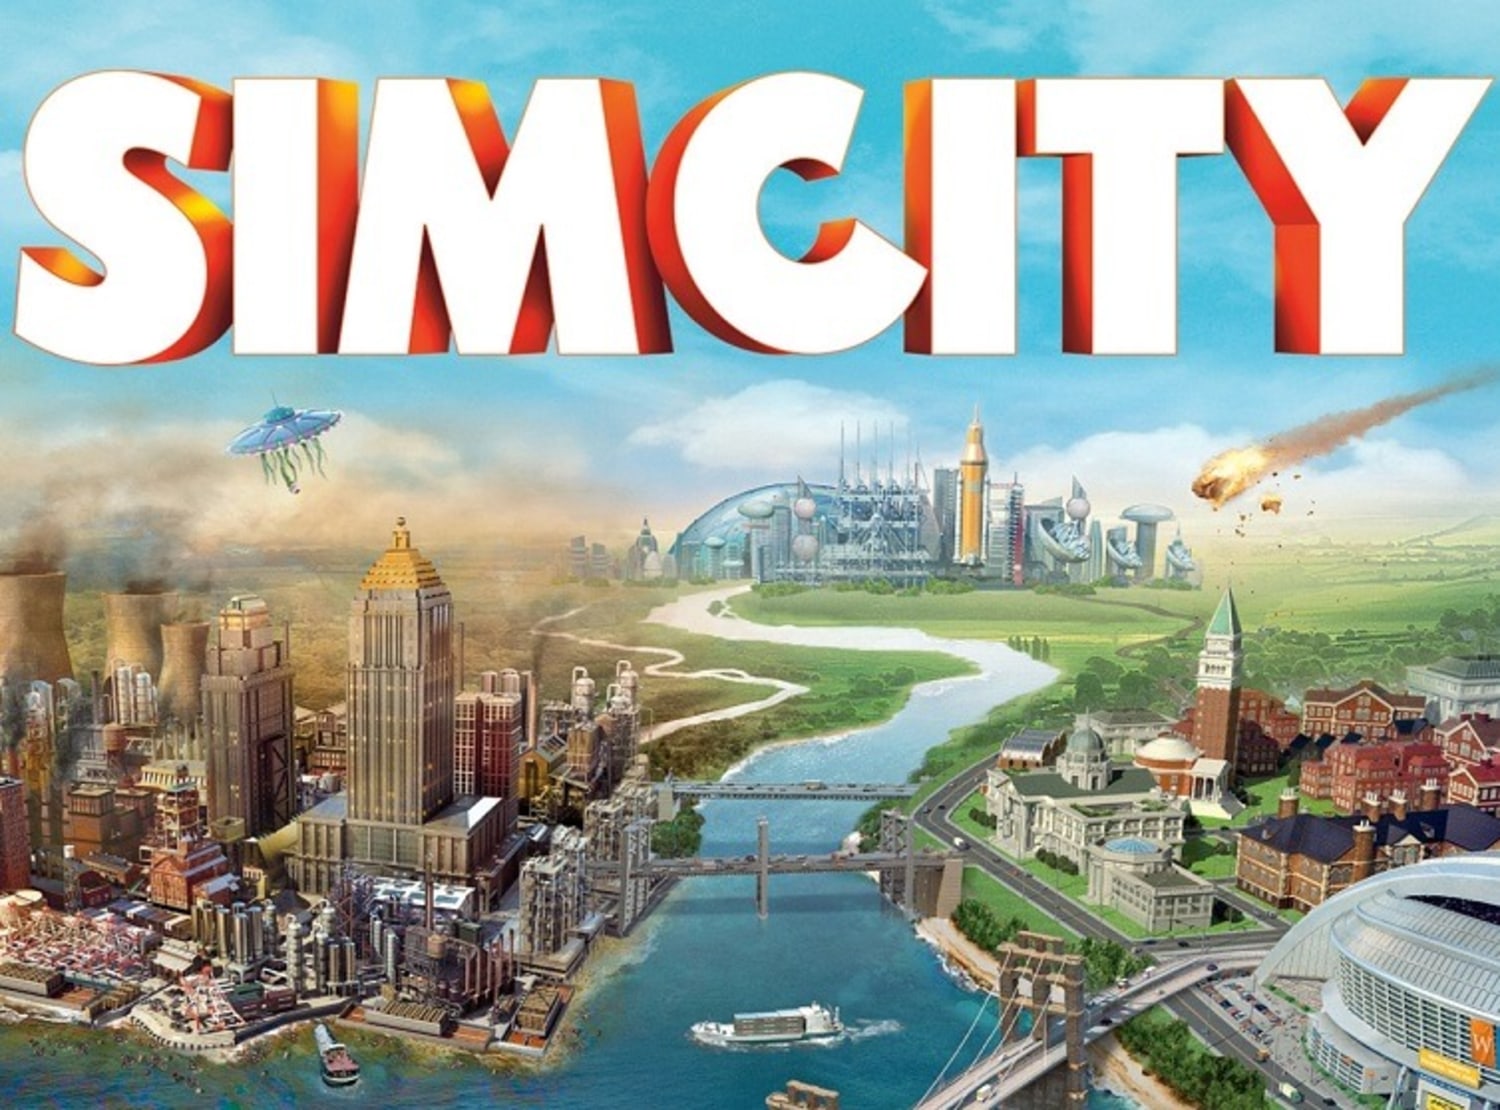 Simcity download free mo dao zu shi book 1 pdf free download